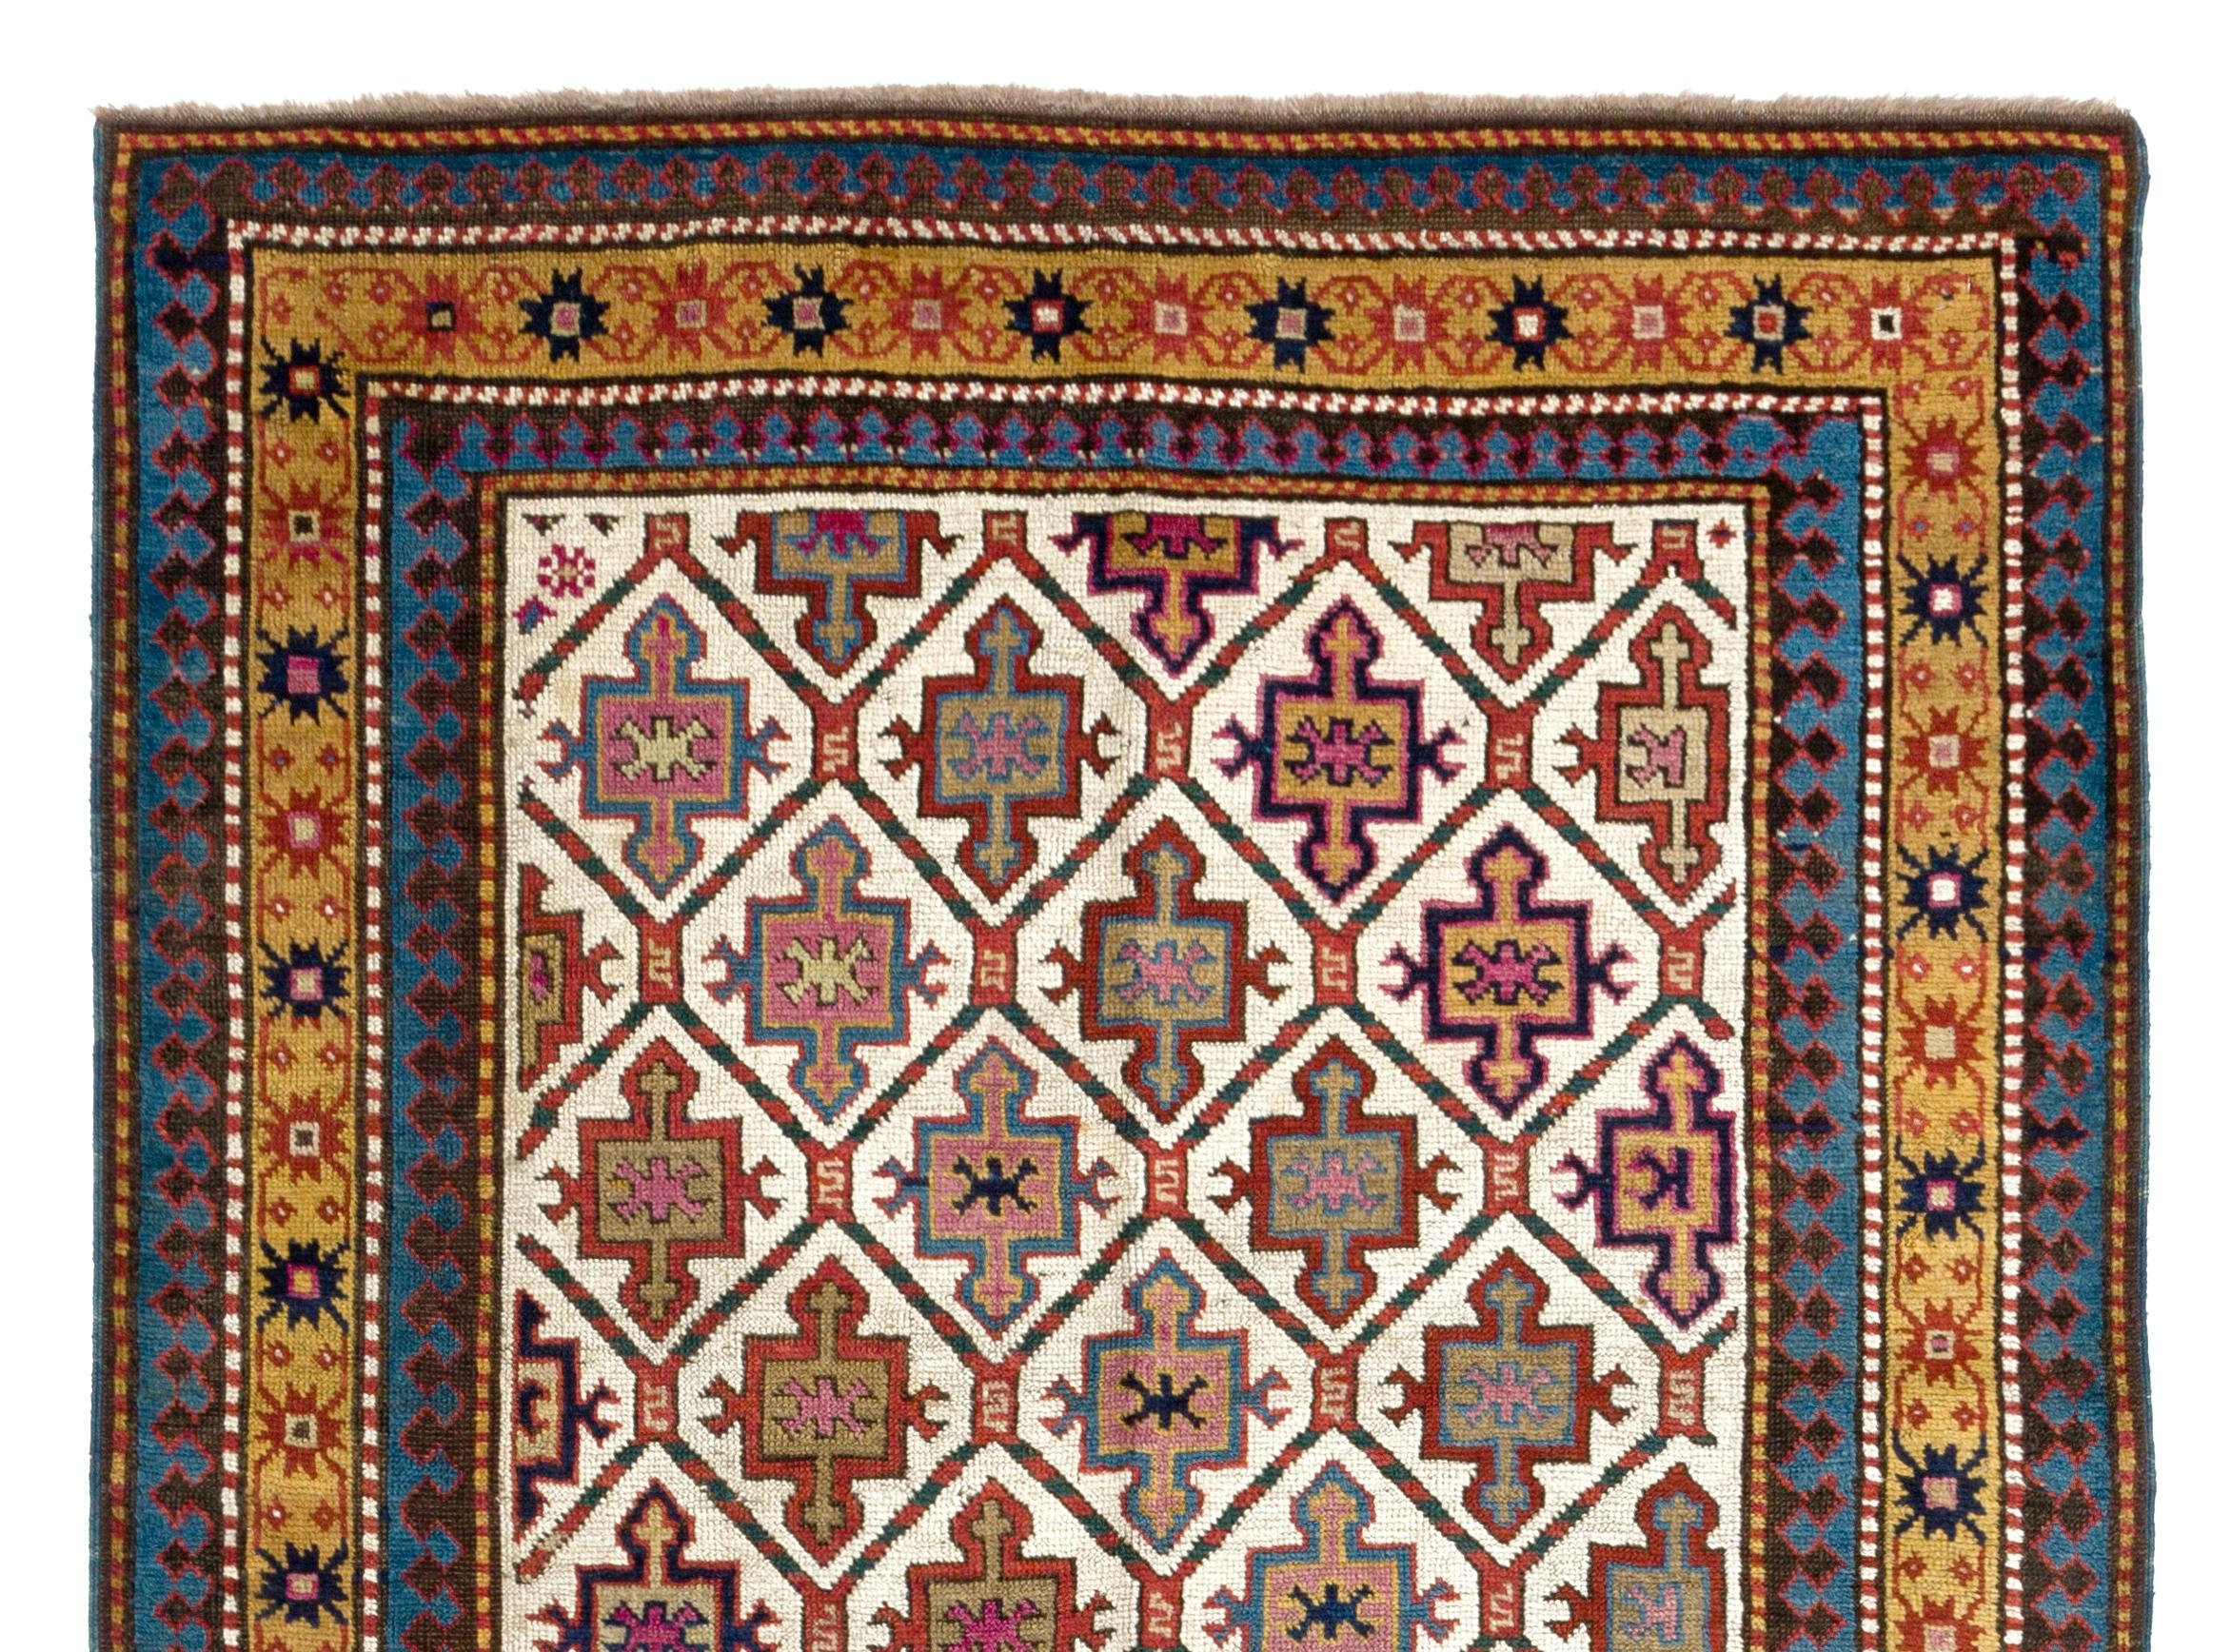 Azerbaijani Rare Antique Caucasian Kazak Rug from Karabagh, Dated, 1812 For Sale